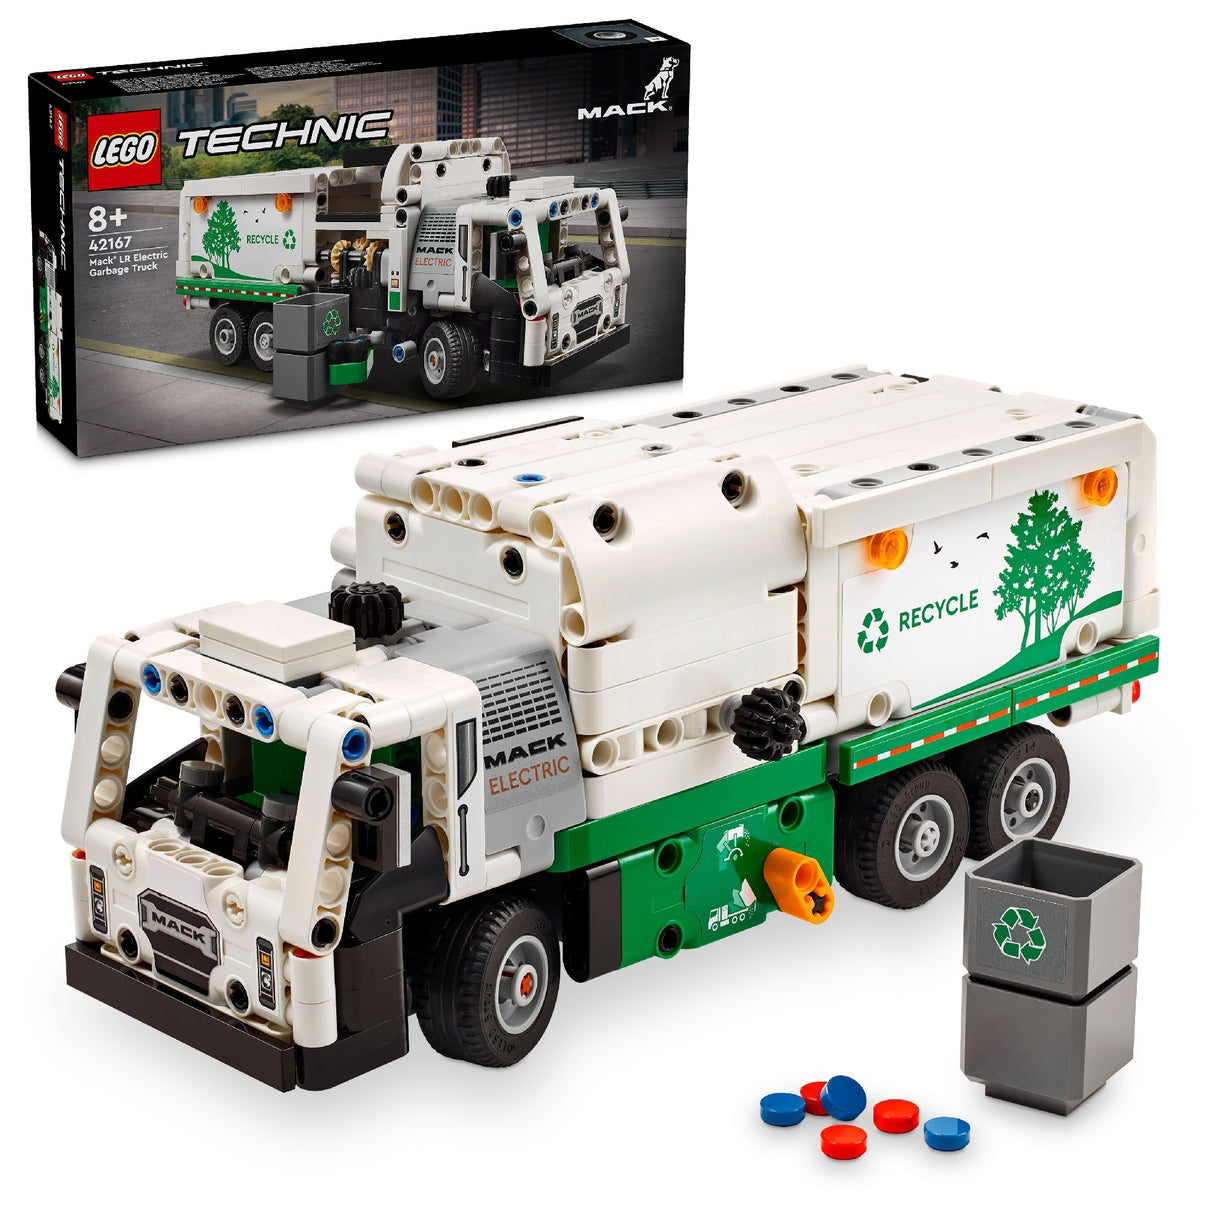 LEGO TECHNIC MACK LR ELECTRIC GARBAGE TRUCK 42167 AGE: 8+